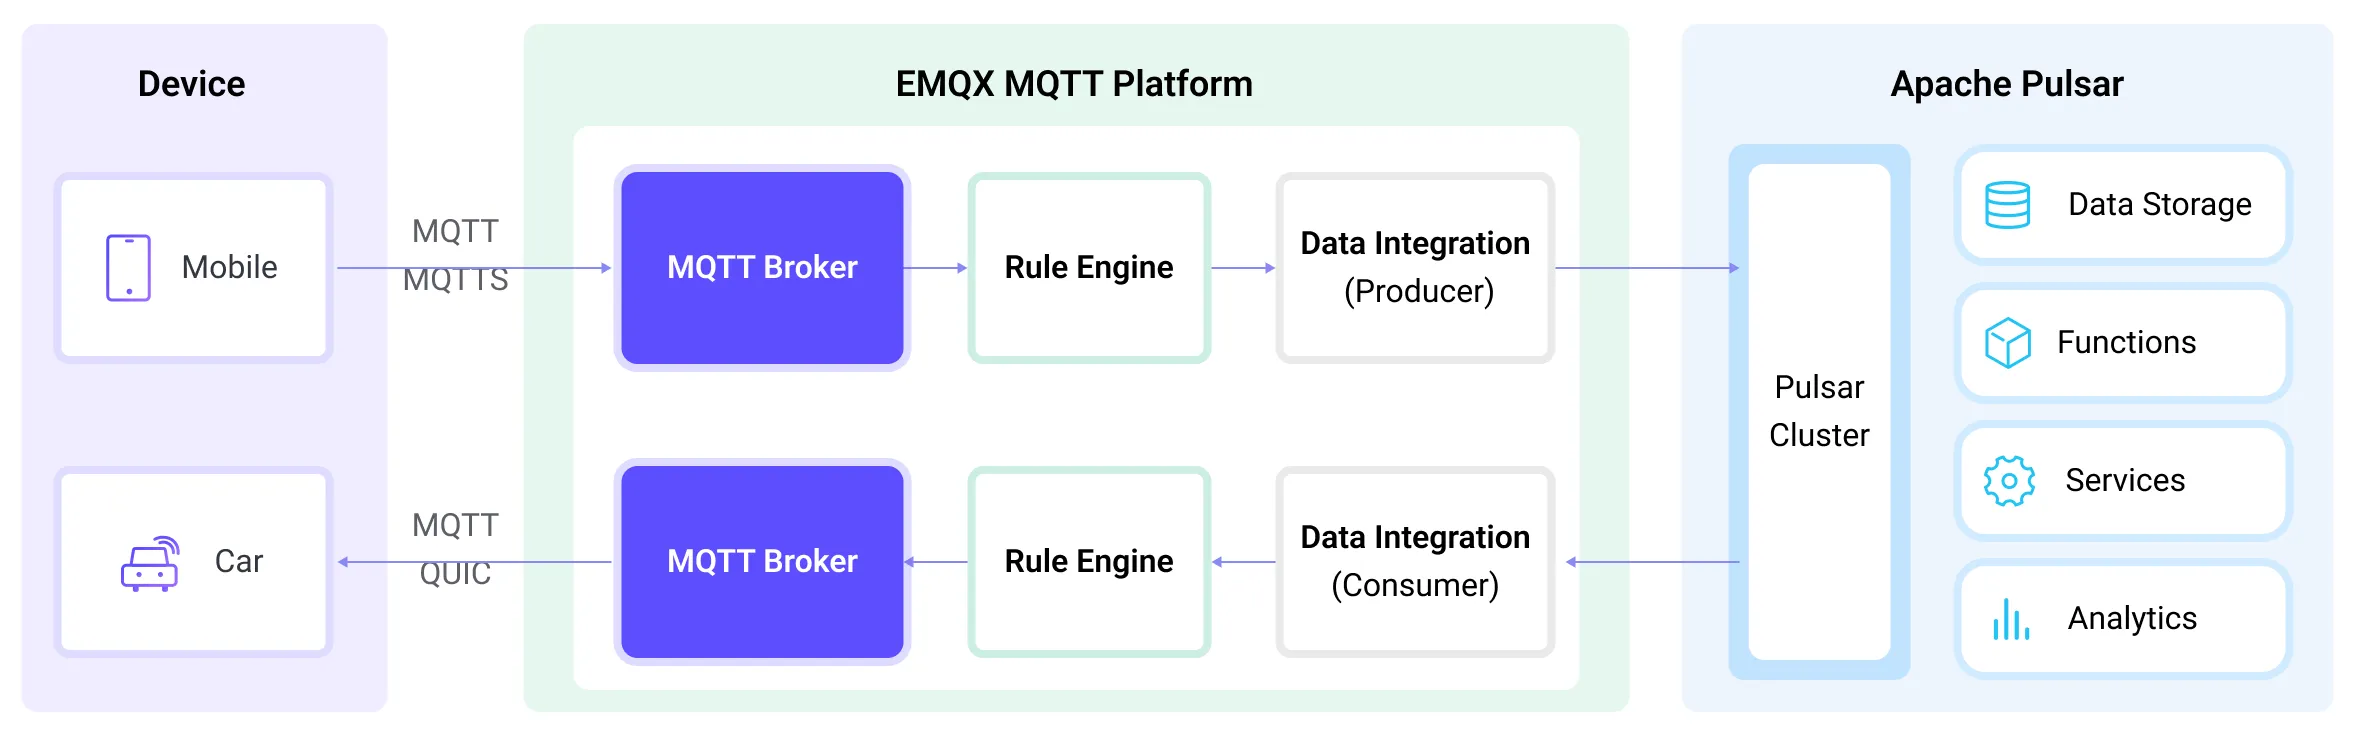 EMQX Platform-Pulsar Data Integration